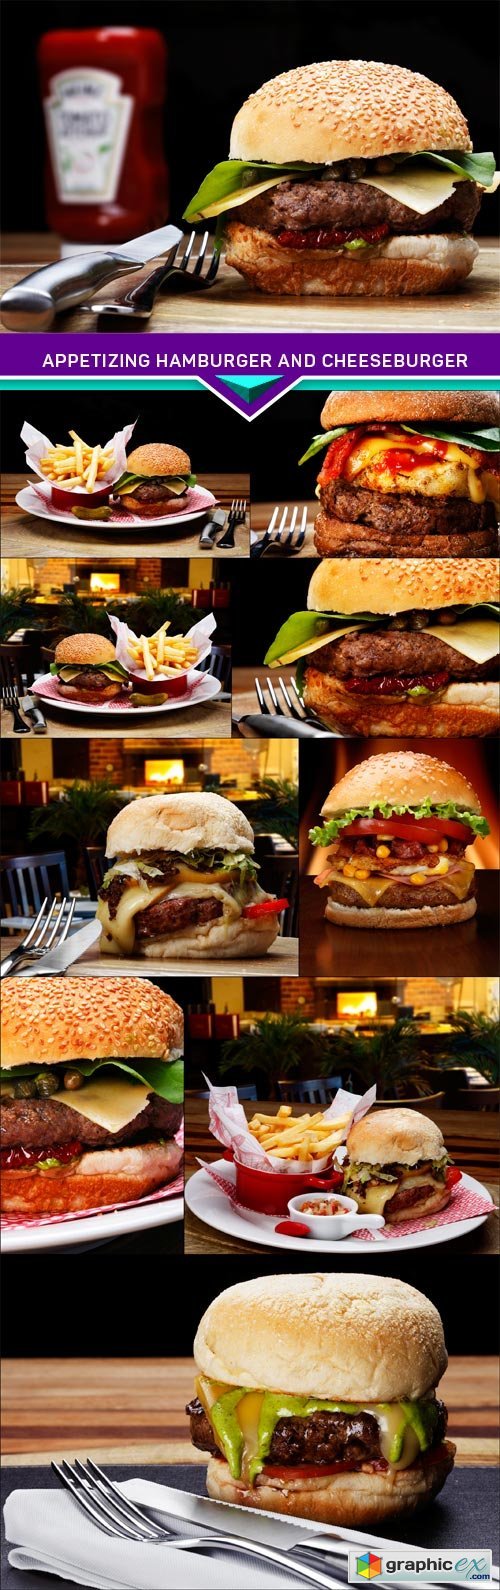 Appetizing hamburger and cheeseburger 10X JPEG